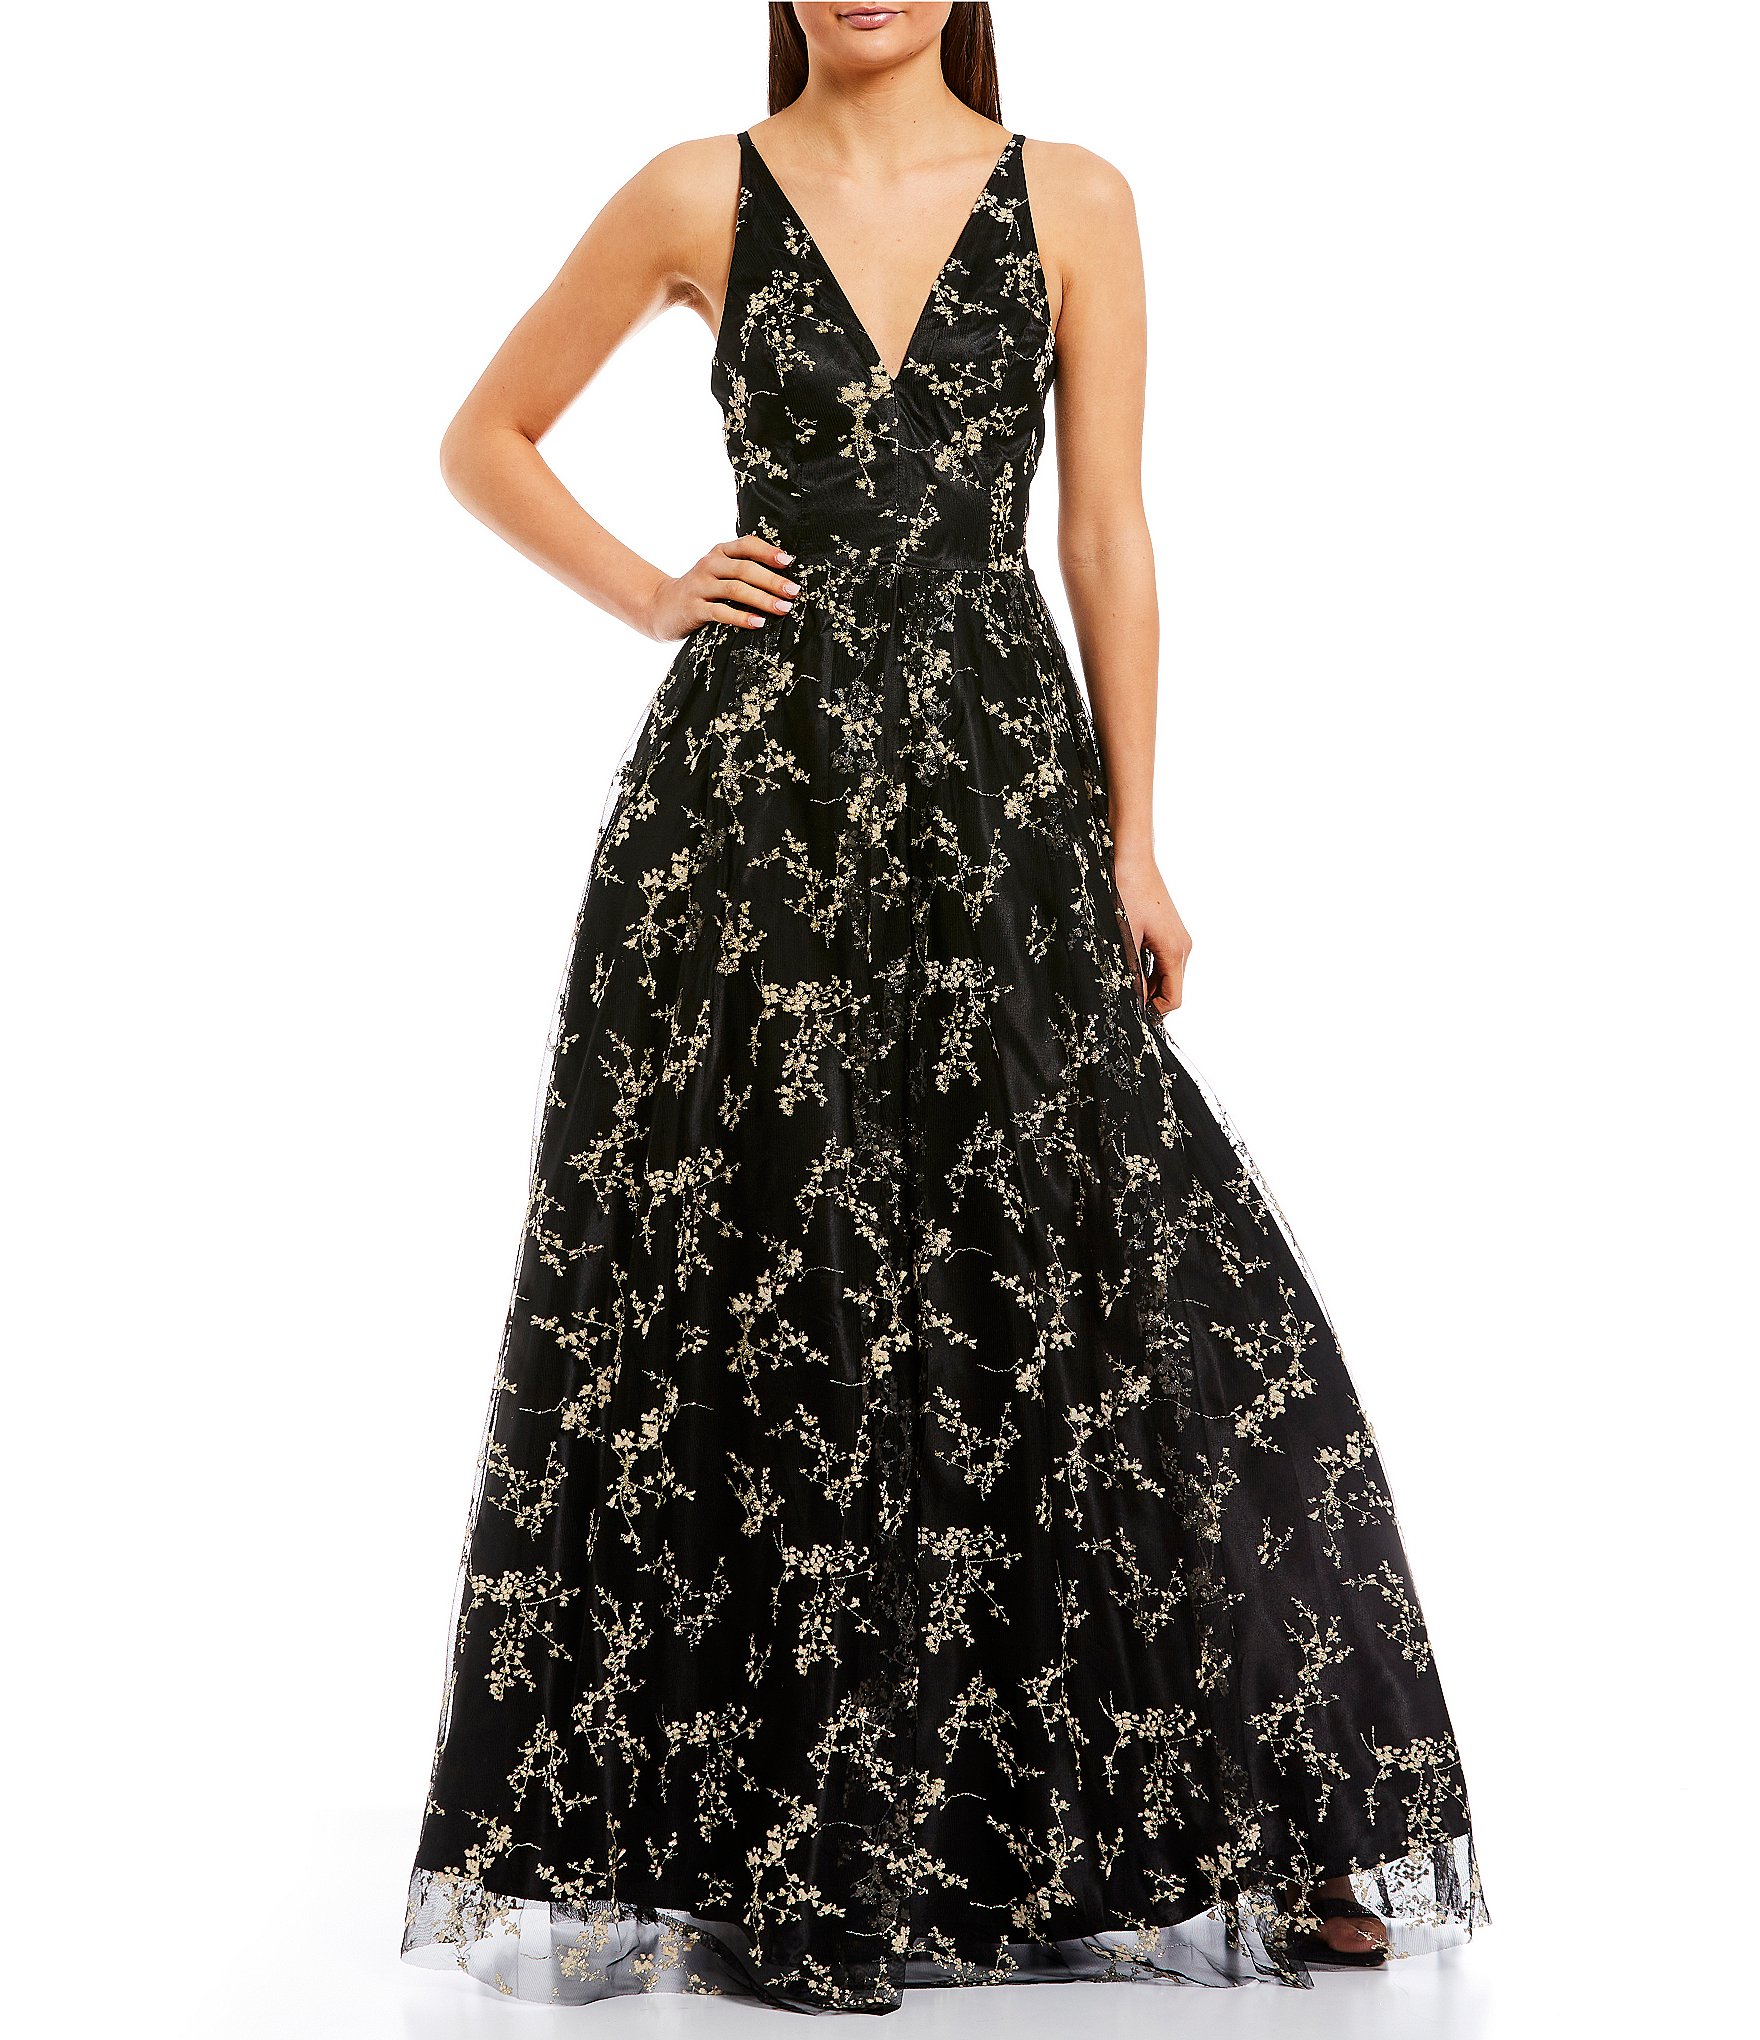 slate: Women's Formal Dresses & Evening Gowns | Dillard's